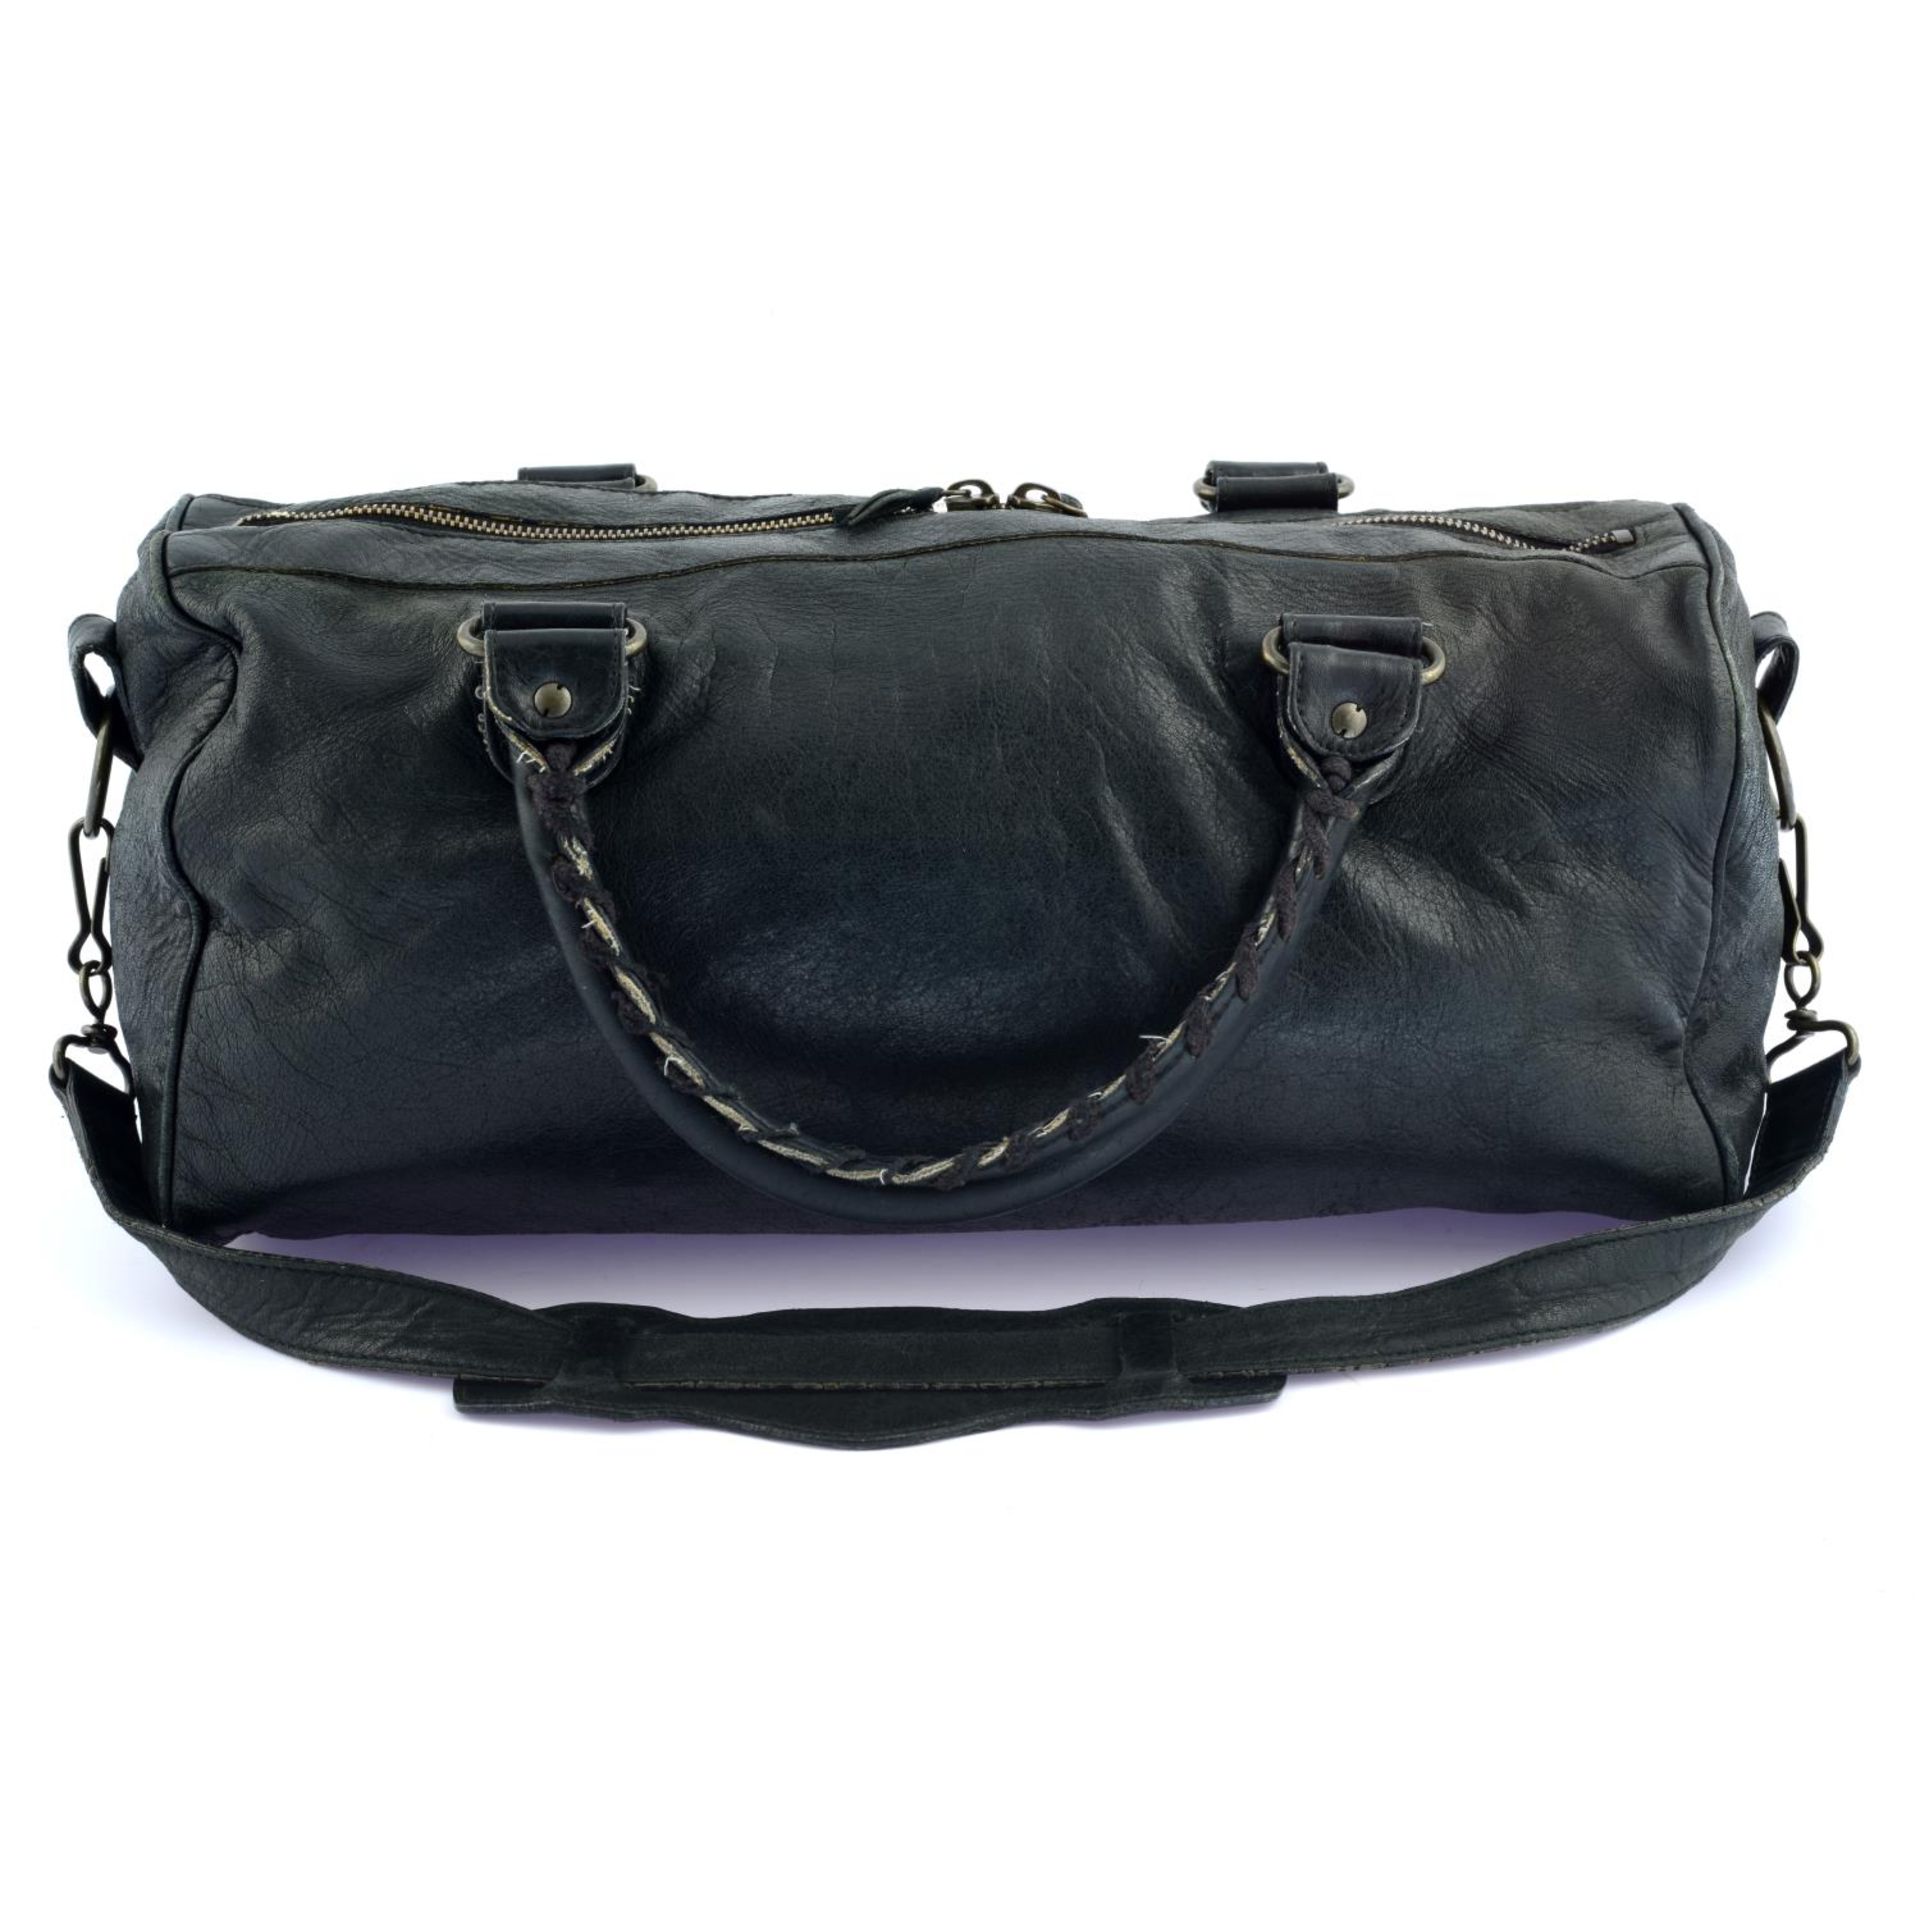 BALENCIAGA - a black leather Twiggy handbag. - Image 2 of 6